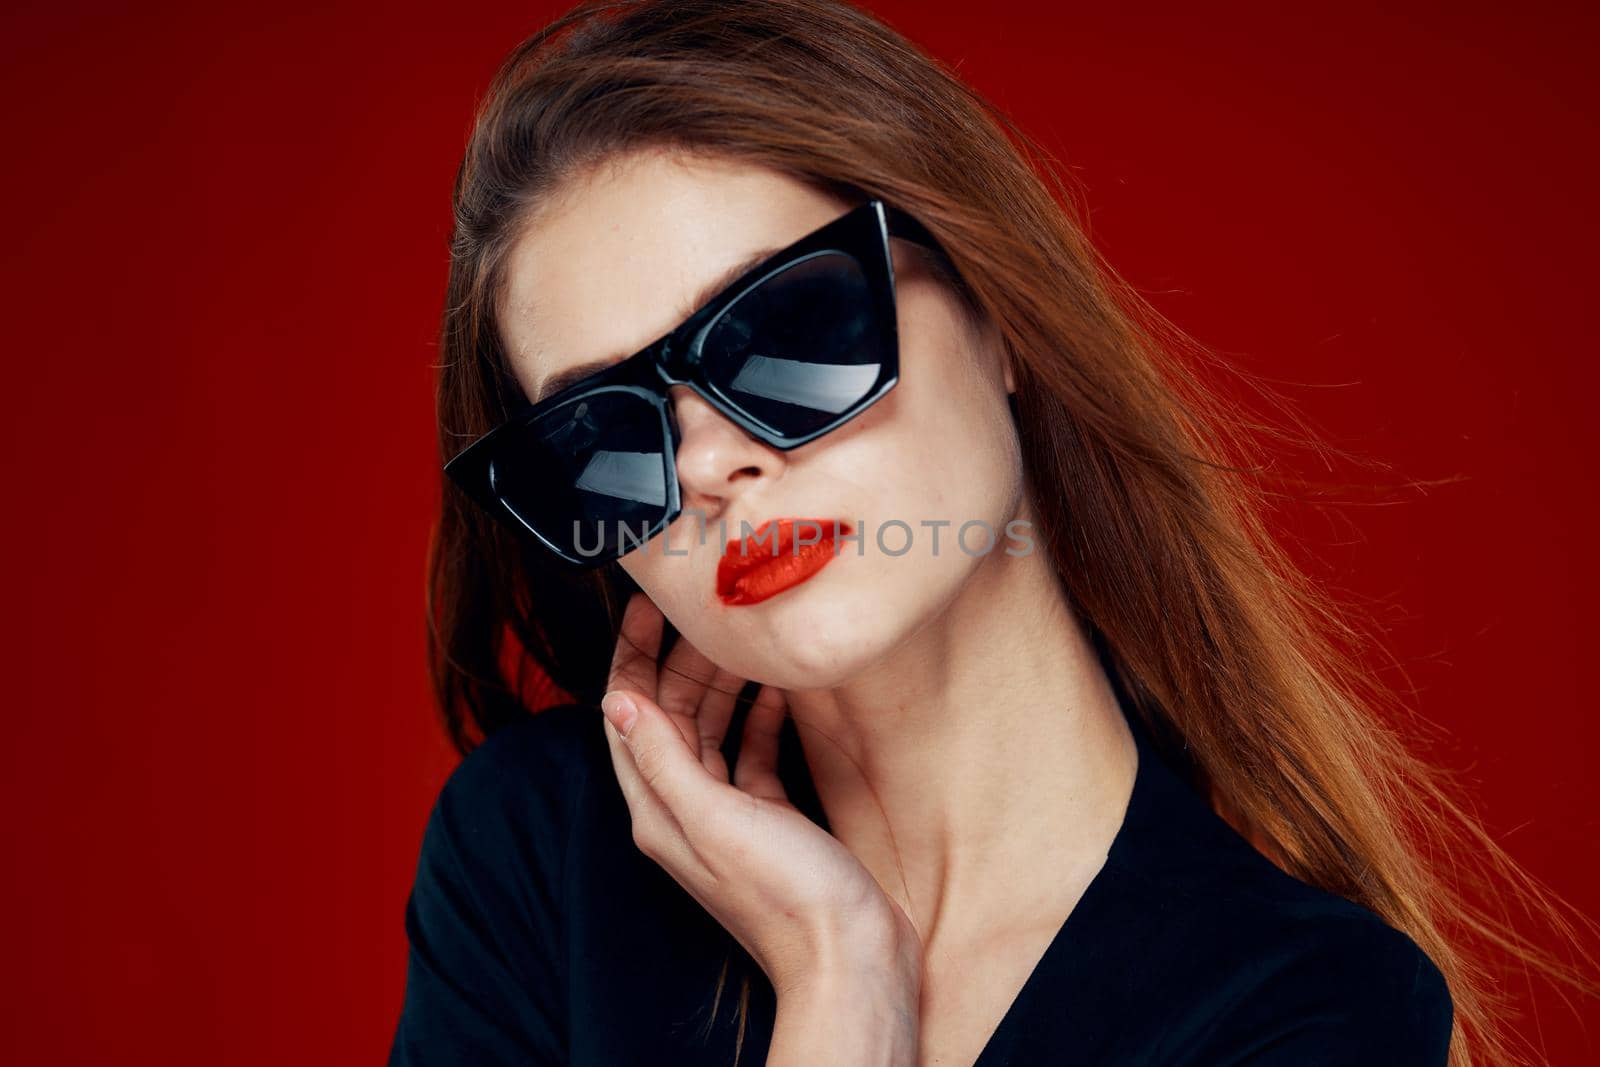 glamorous woman wearing sunglasses red lips posing close-up. High quality photo